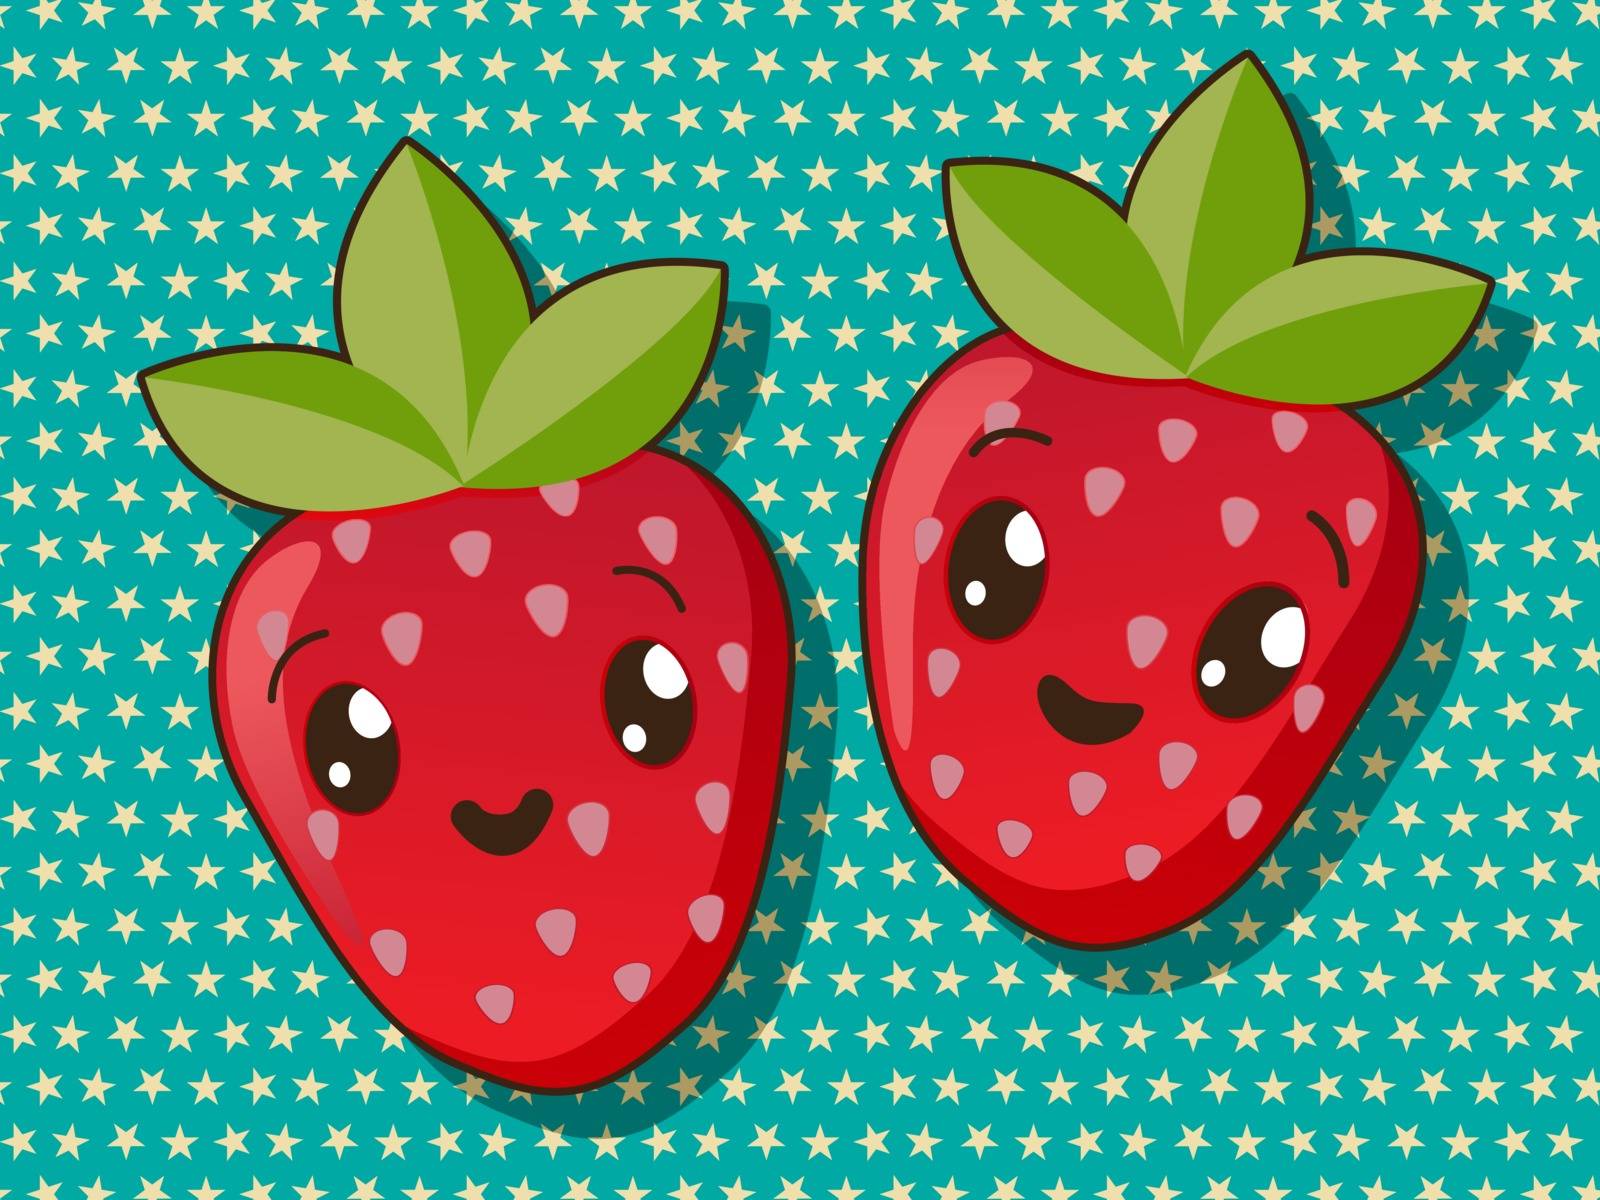 Kawaii strawberry icons by Lirch